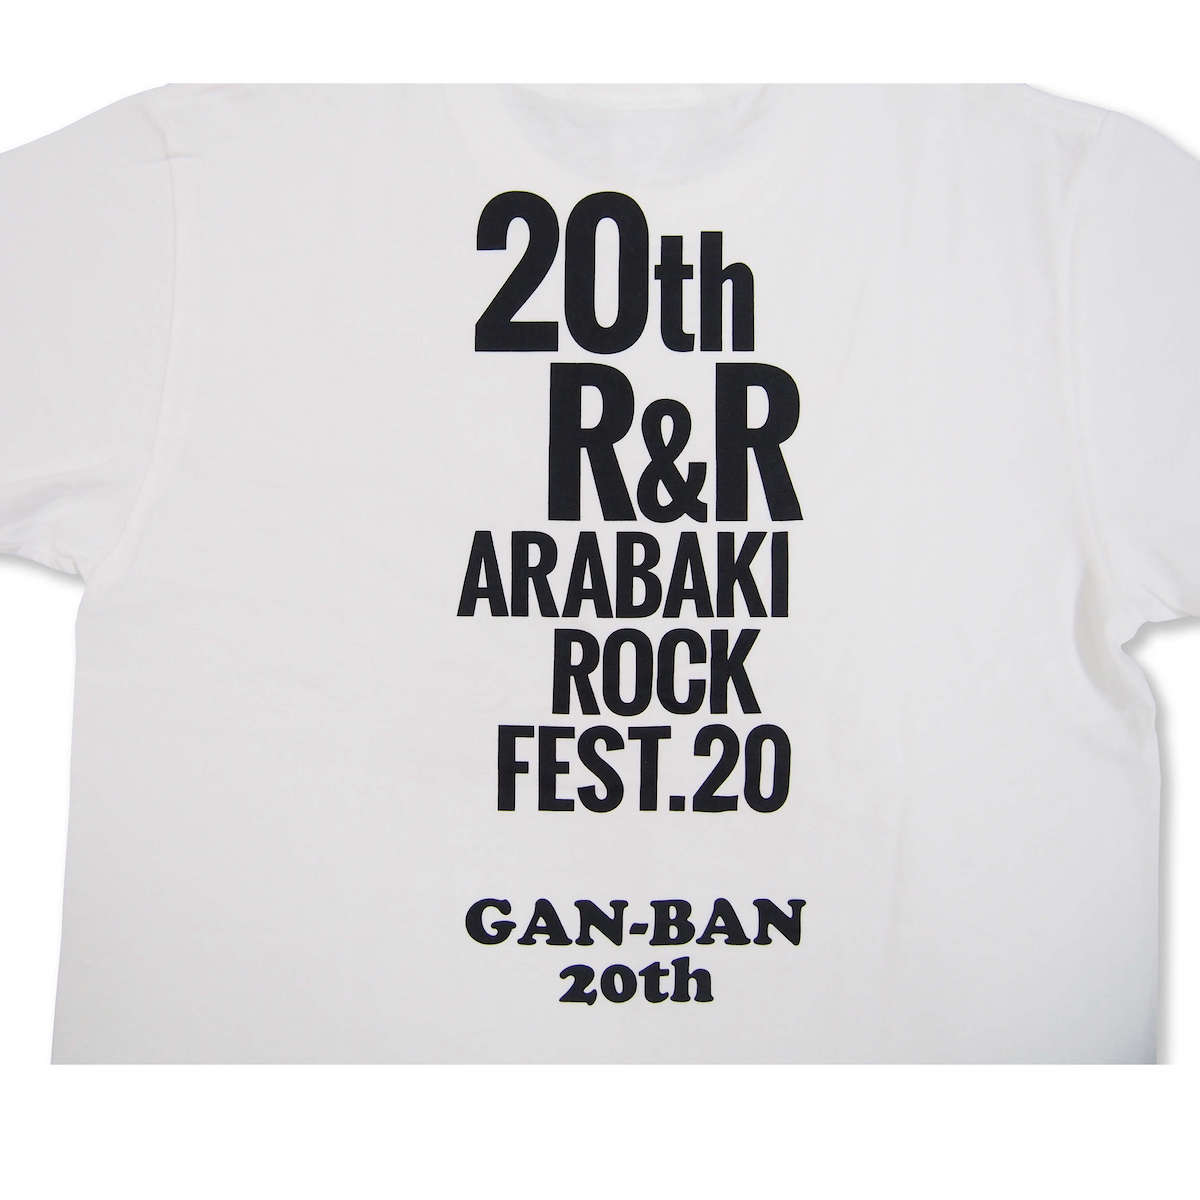 ARABAKI ROCK FEST.20 × GAN-BAN / SNOOPY Tシャツ - GAN-BAN Official 